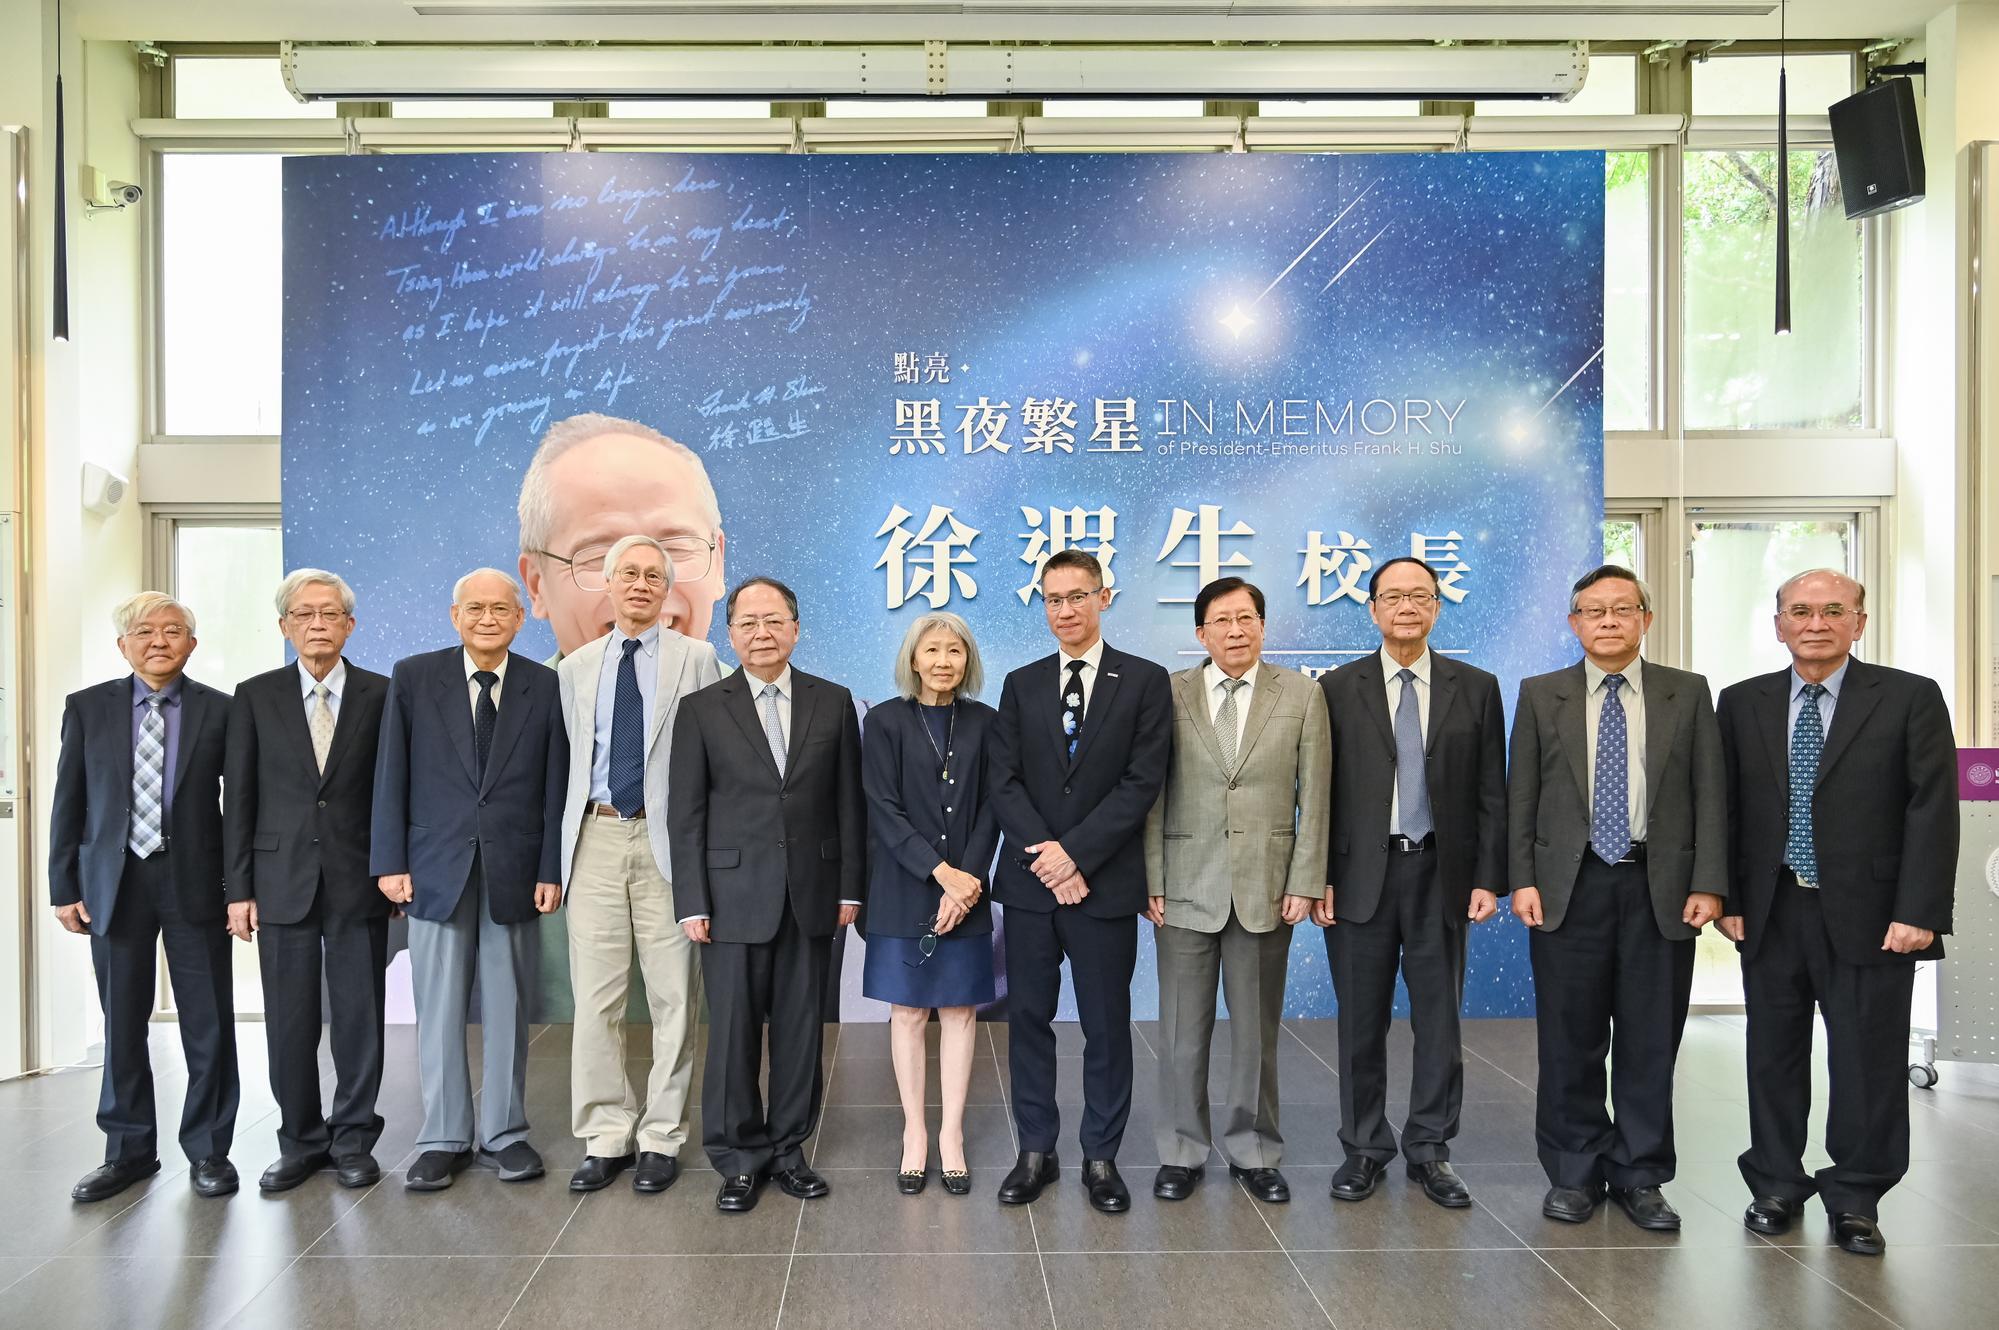 Left to right: Senior Vice President of MAAT Hsiang-liu Wang (王祥騮) (representing Shu's family friend, Dr. Za-lee Moh莫若礪), Chin-tay Shih (史欽泰), former dean of the College of Technology Management, Ming-teh Hsu (許明德), former chairman of the Tsinghua Alumni Association, Dr. Ronald E. Taam (譚遠培) from Academia Sinica, former President Lih-juann Chen (陳力俊), Helen Pu (濮建平), President W. John Kao (高為元), former President Chao-shiuan Liu (劉兆玄), former President Wen-tsuen Chen (陳文村), former President Hocheng Hong (賀陳弘), and former Vice President Wen-hwa Chen (陳文華)